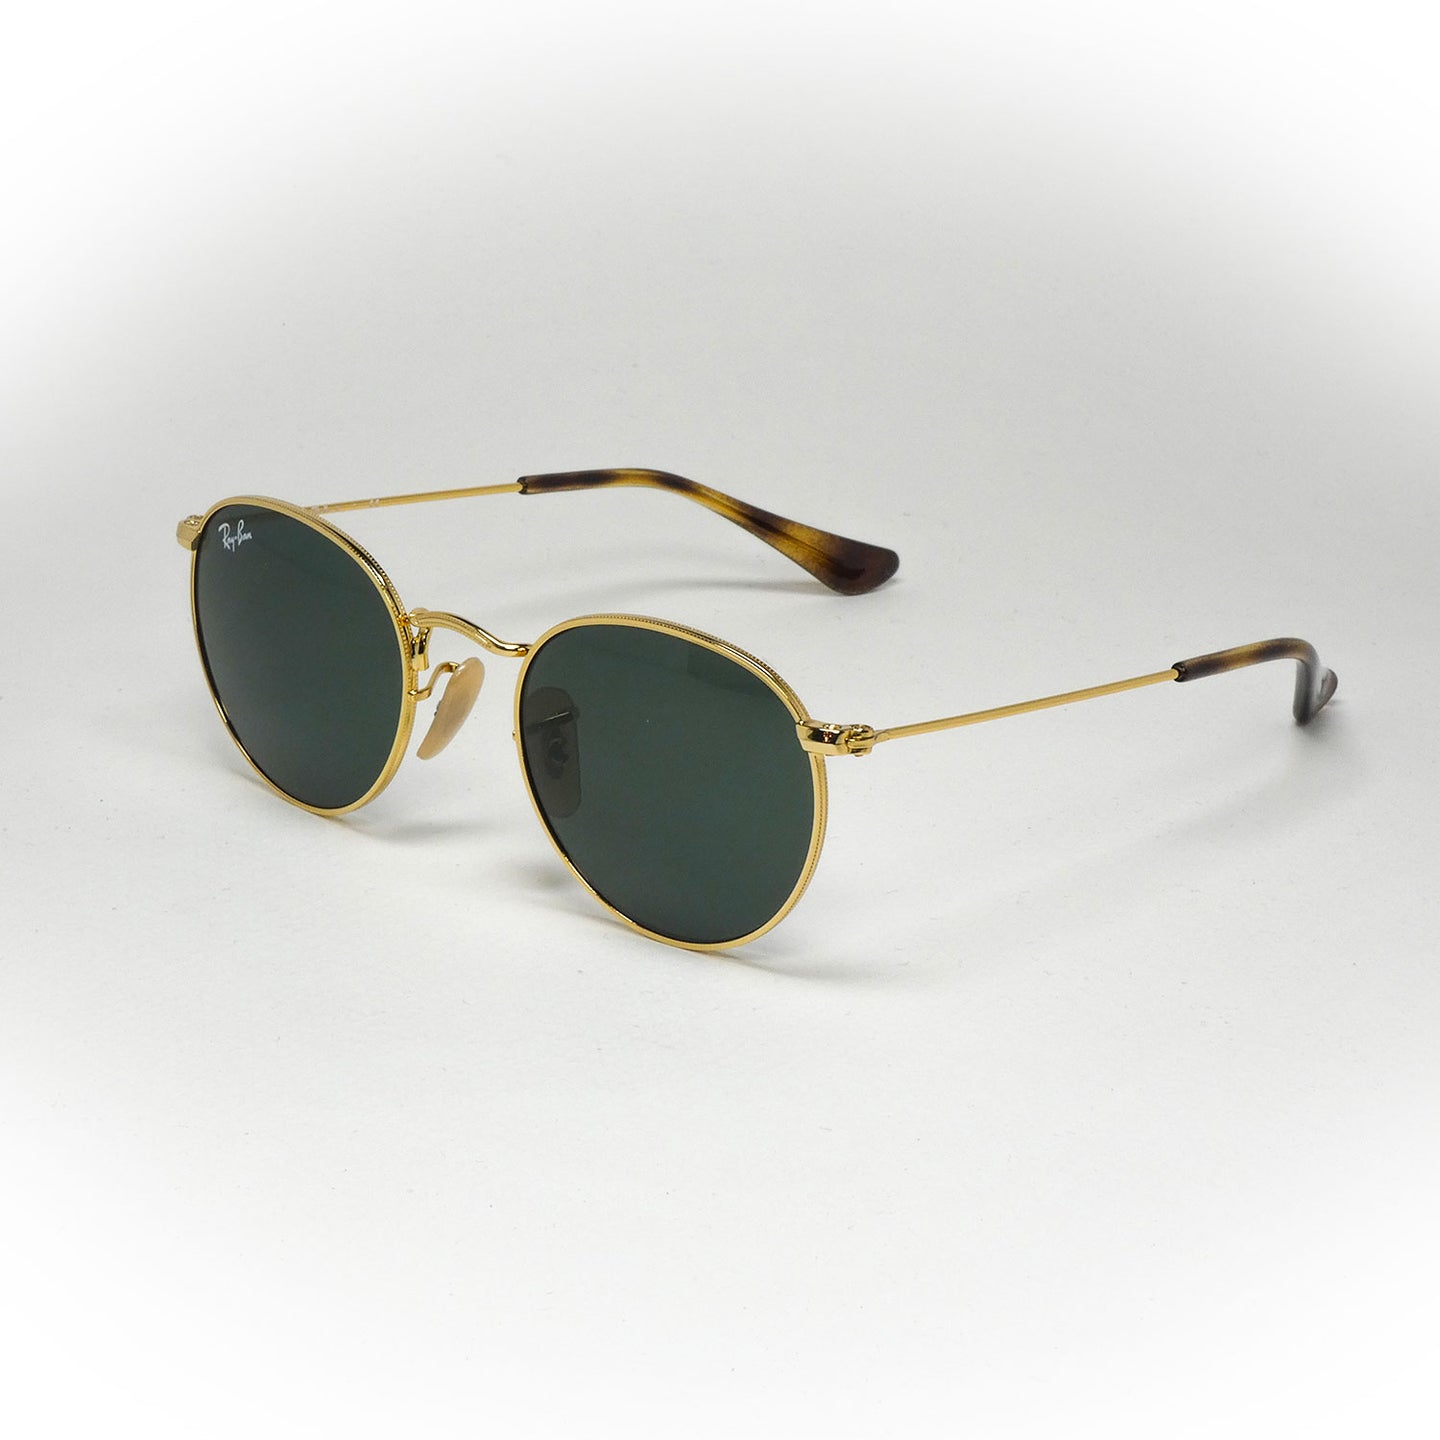 sunglasses ray ban model rj 9547s color 223/71 gold